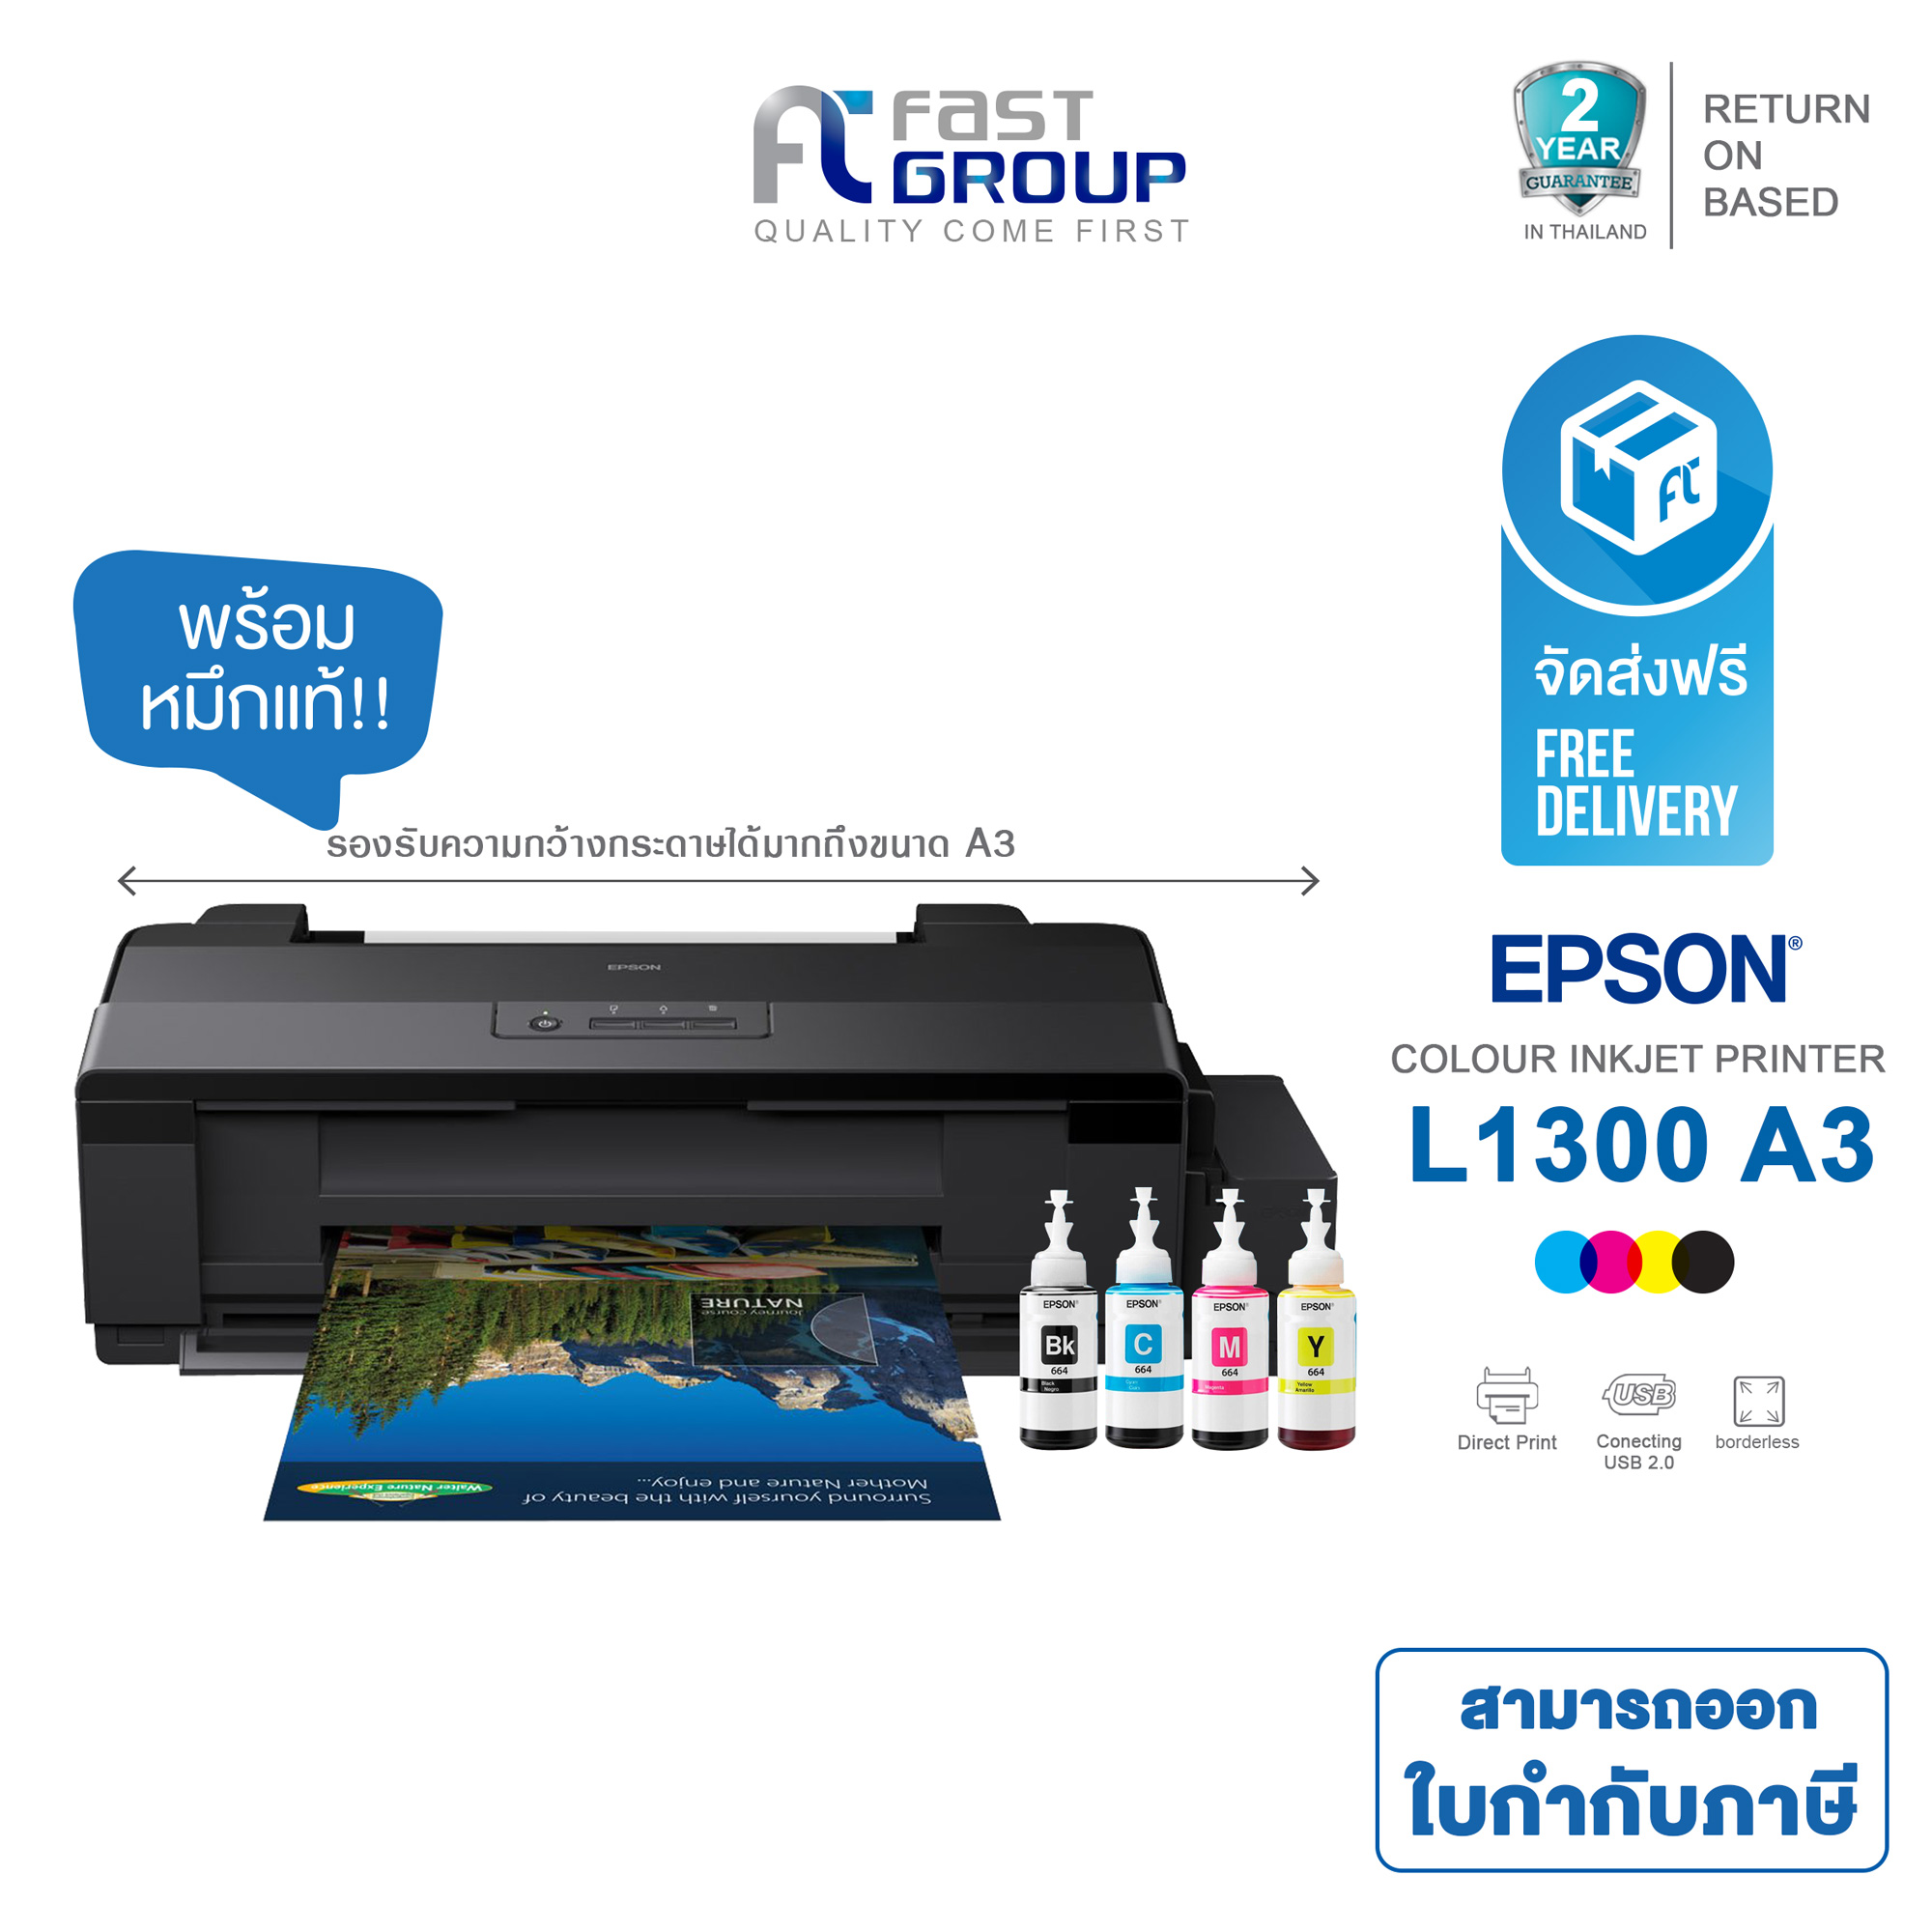 Epson L1300 A3 Ink Tank Printer เครื่องพิมพ์อิงค์เจ็ท ขนาด A3 โดย สยามทีวี By Siam Tv Mixasale 4411